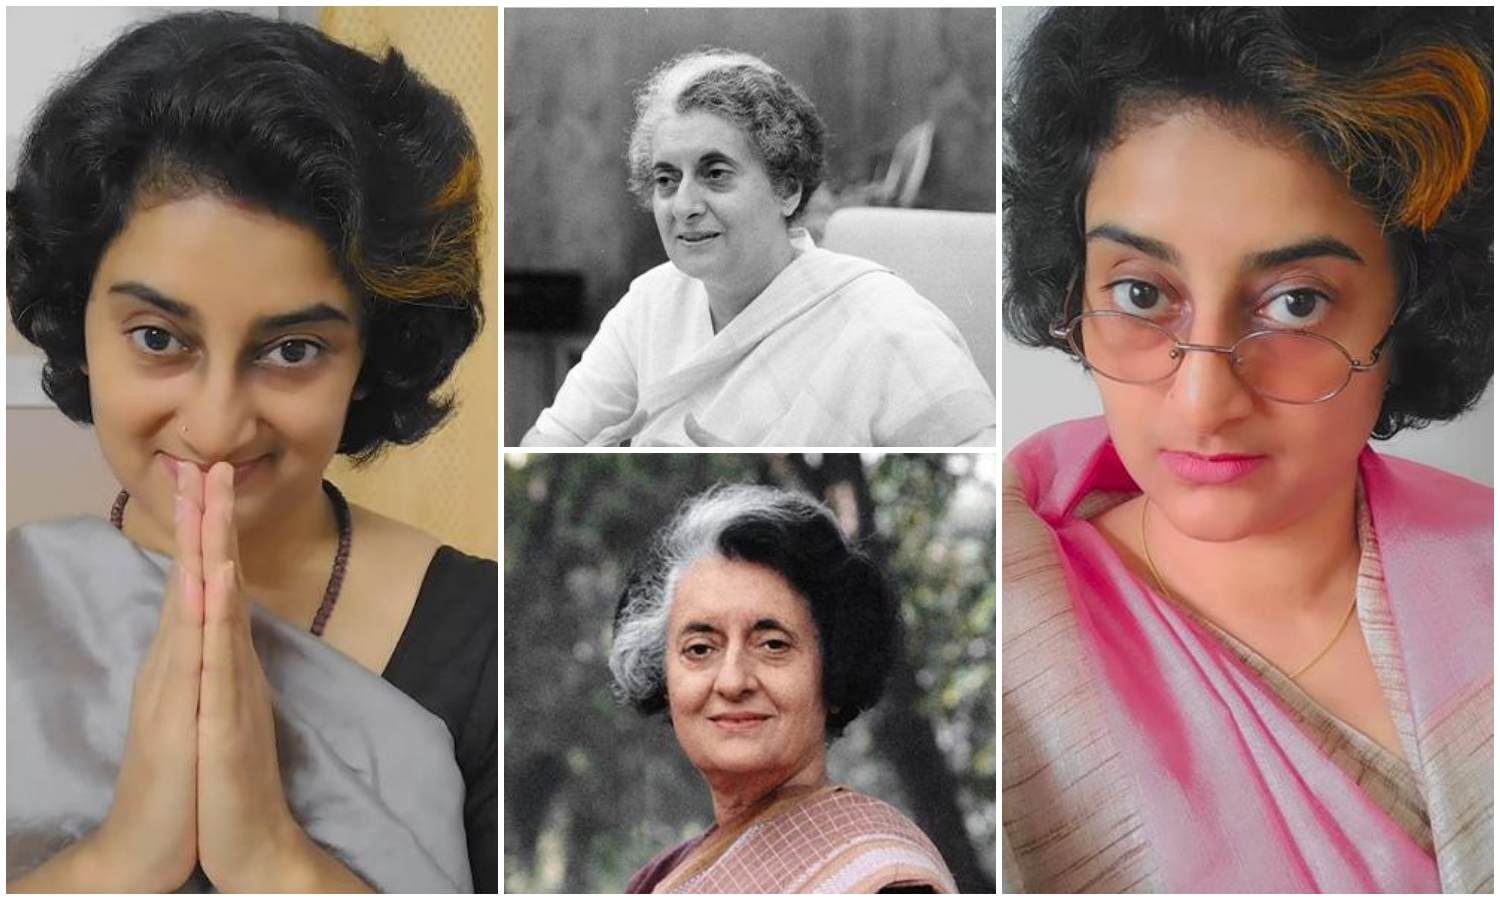 A Lady Recreated Indira Gandhi Look